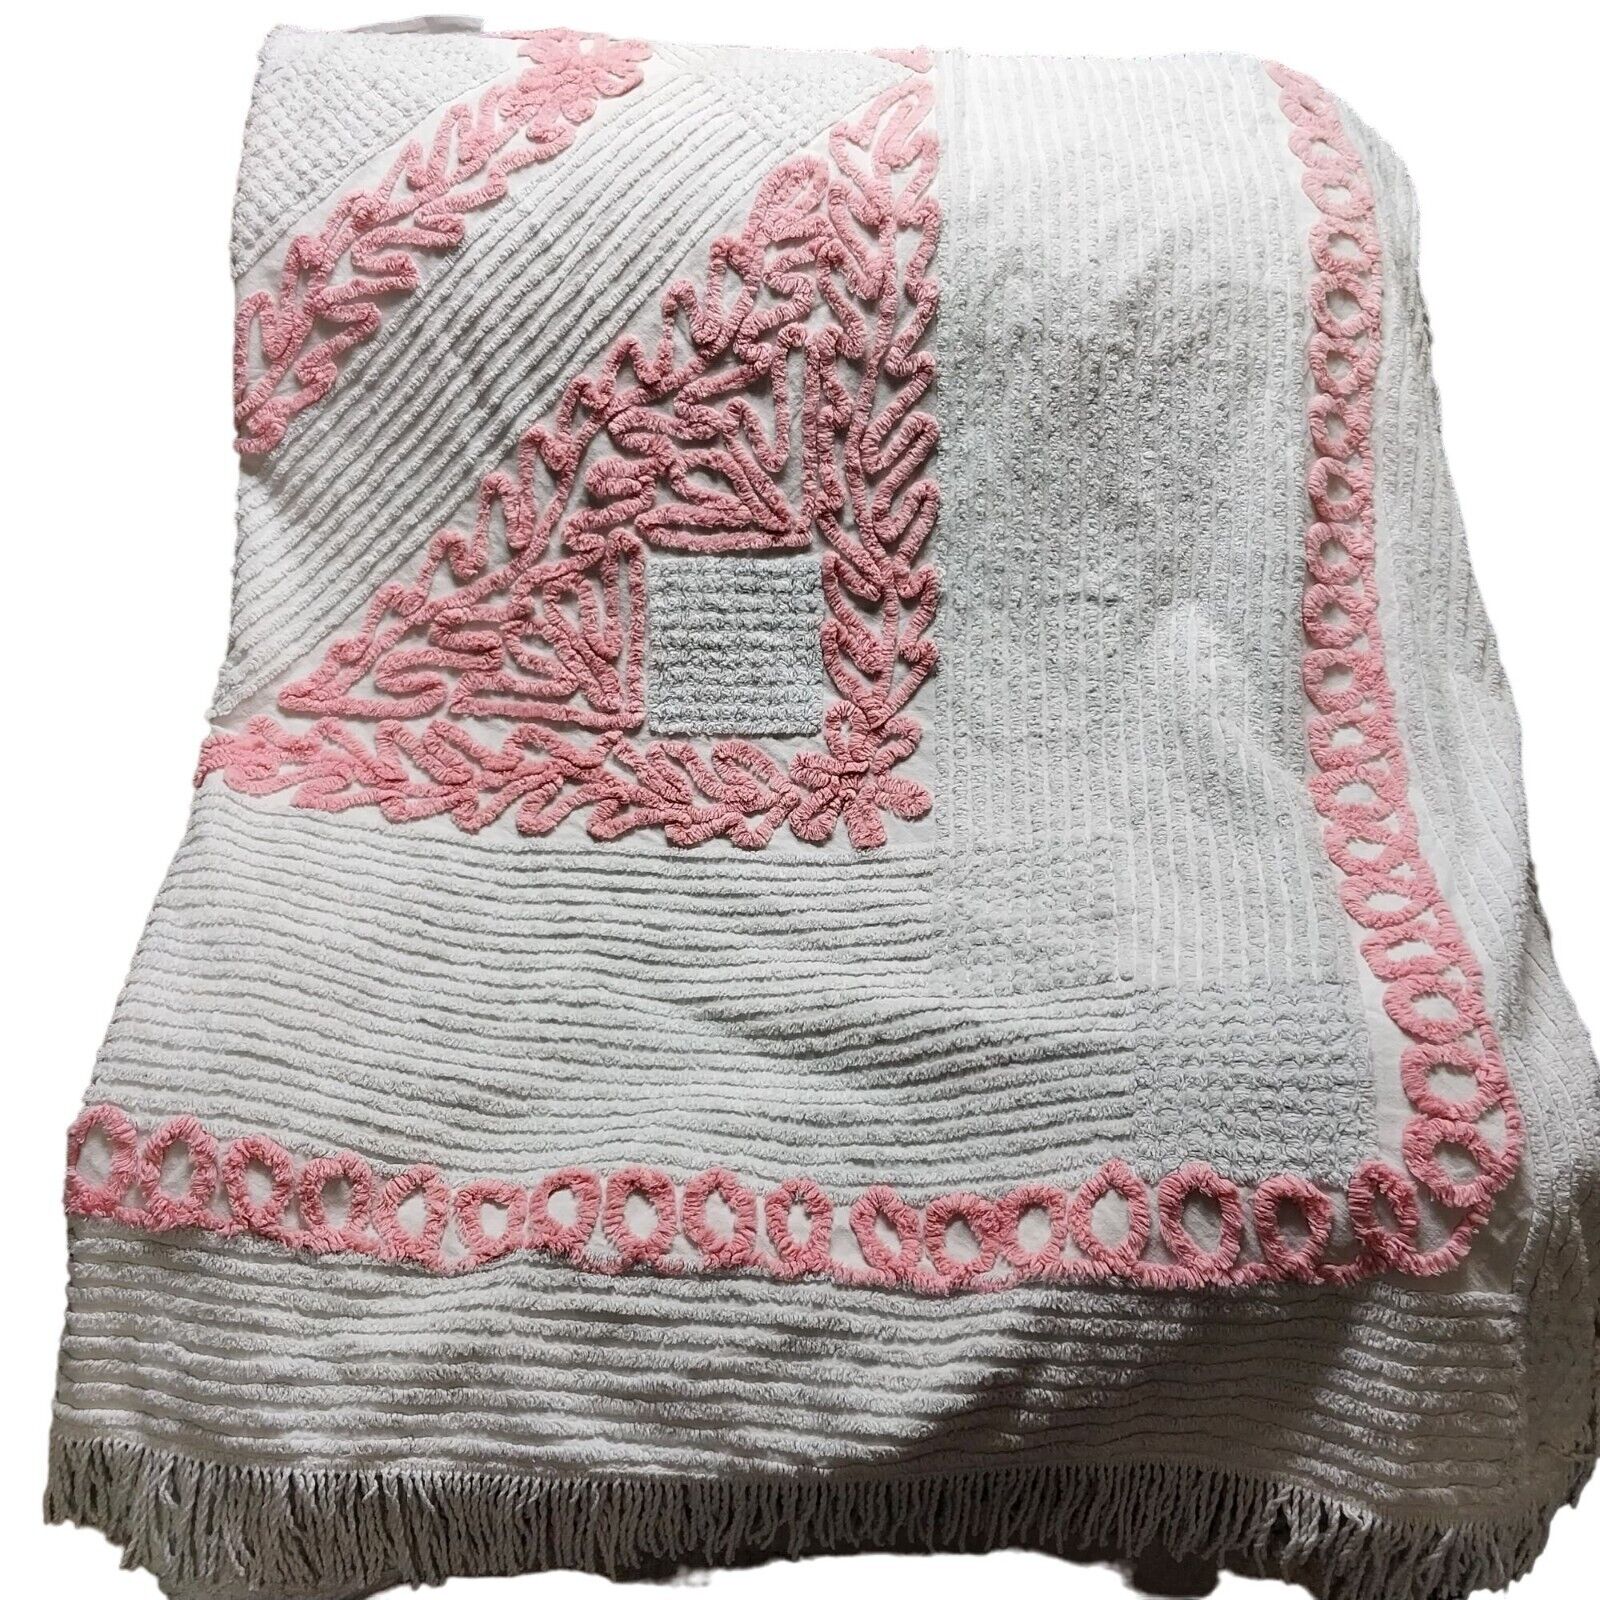 Chenille Bedspread Vintage King Sized Pink & White Blanket